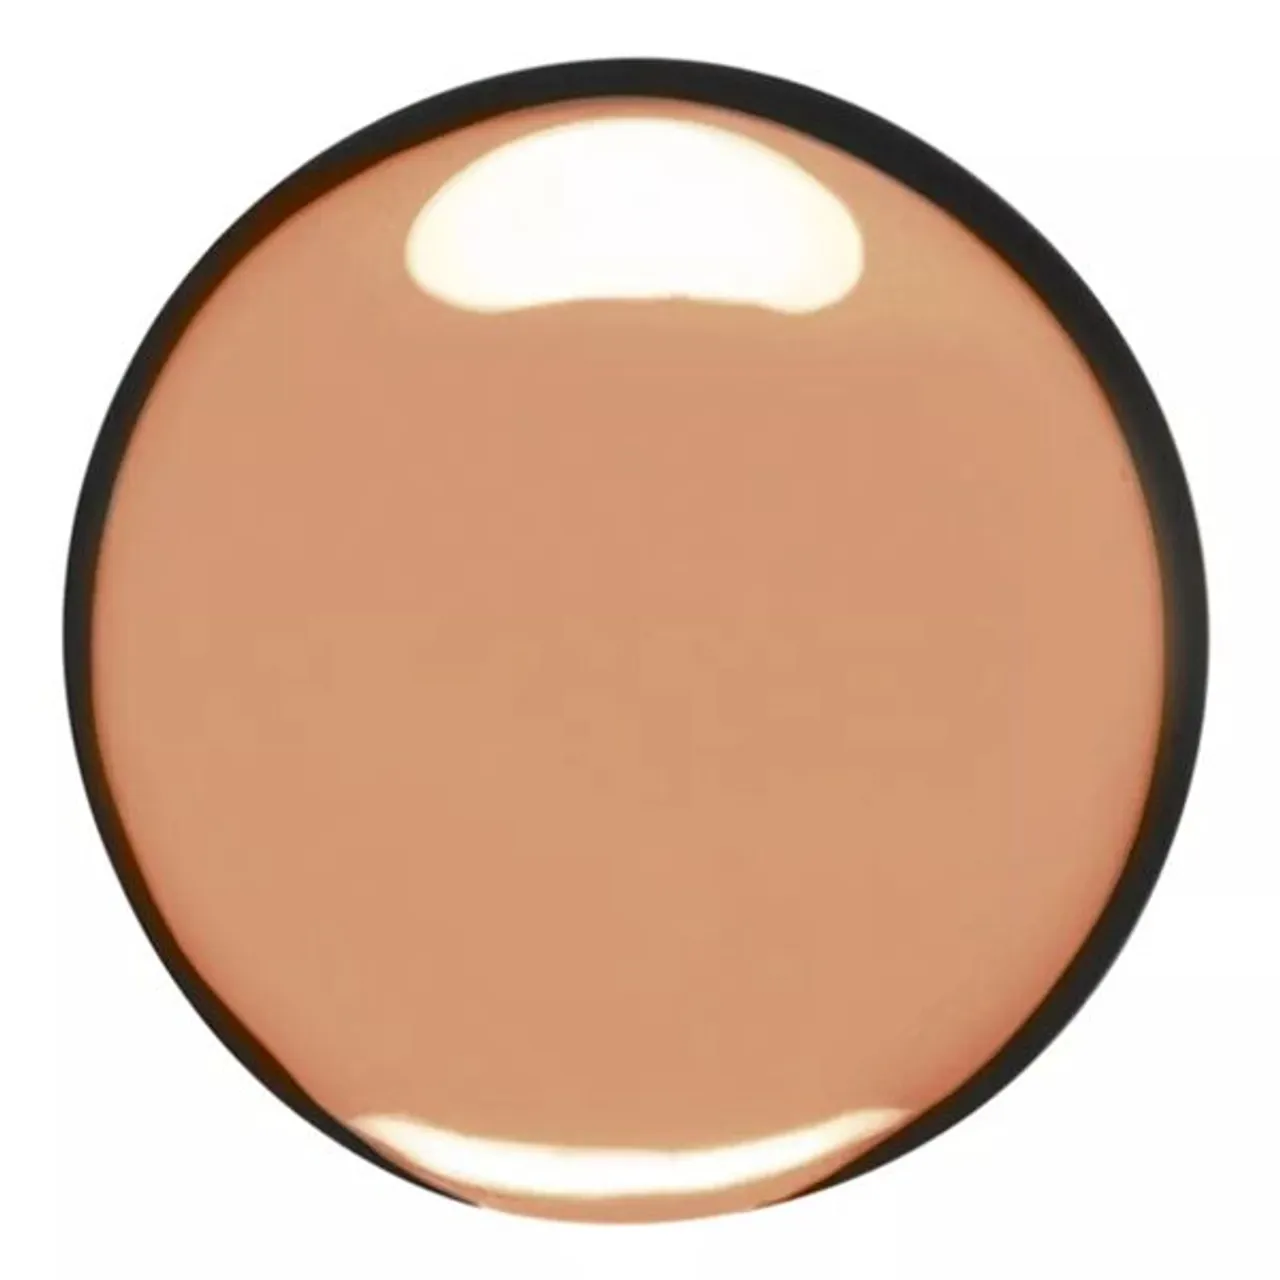 Clarins Skin Illusion Foundation SPF 15 - 112 Amber - Unisex - Size: 30ml